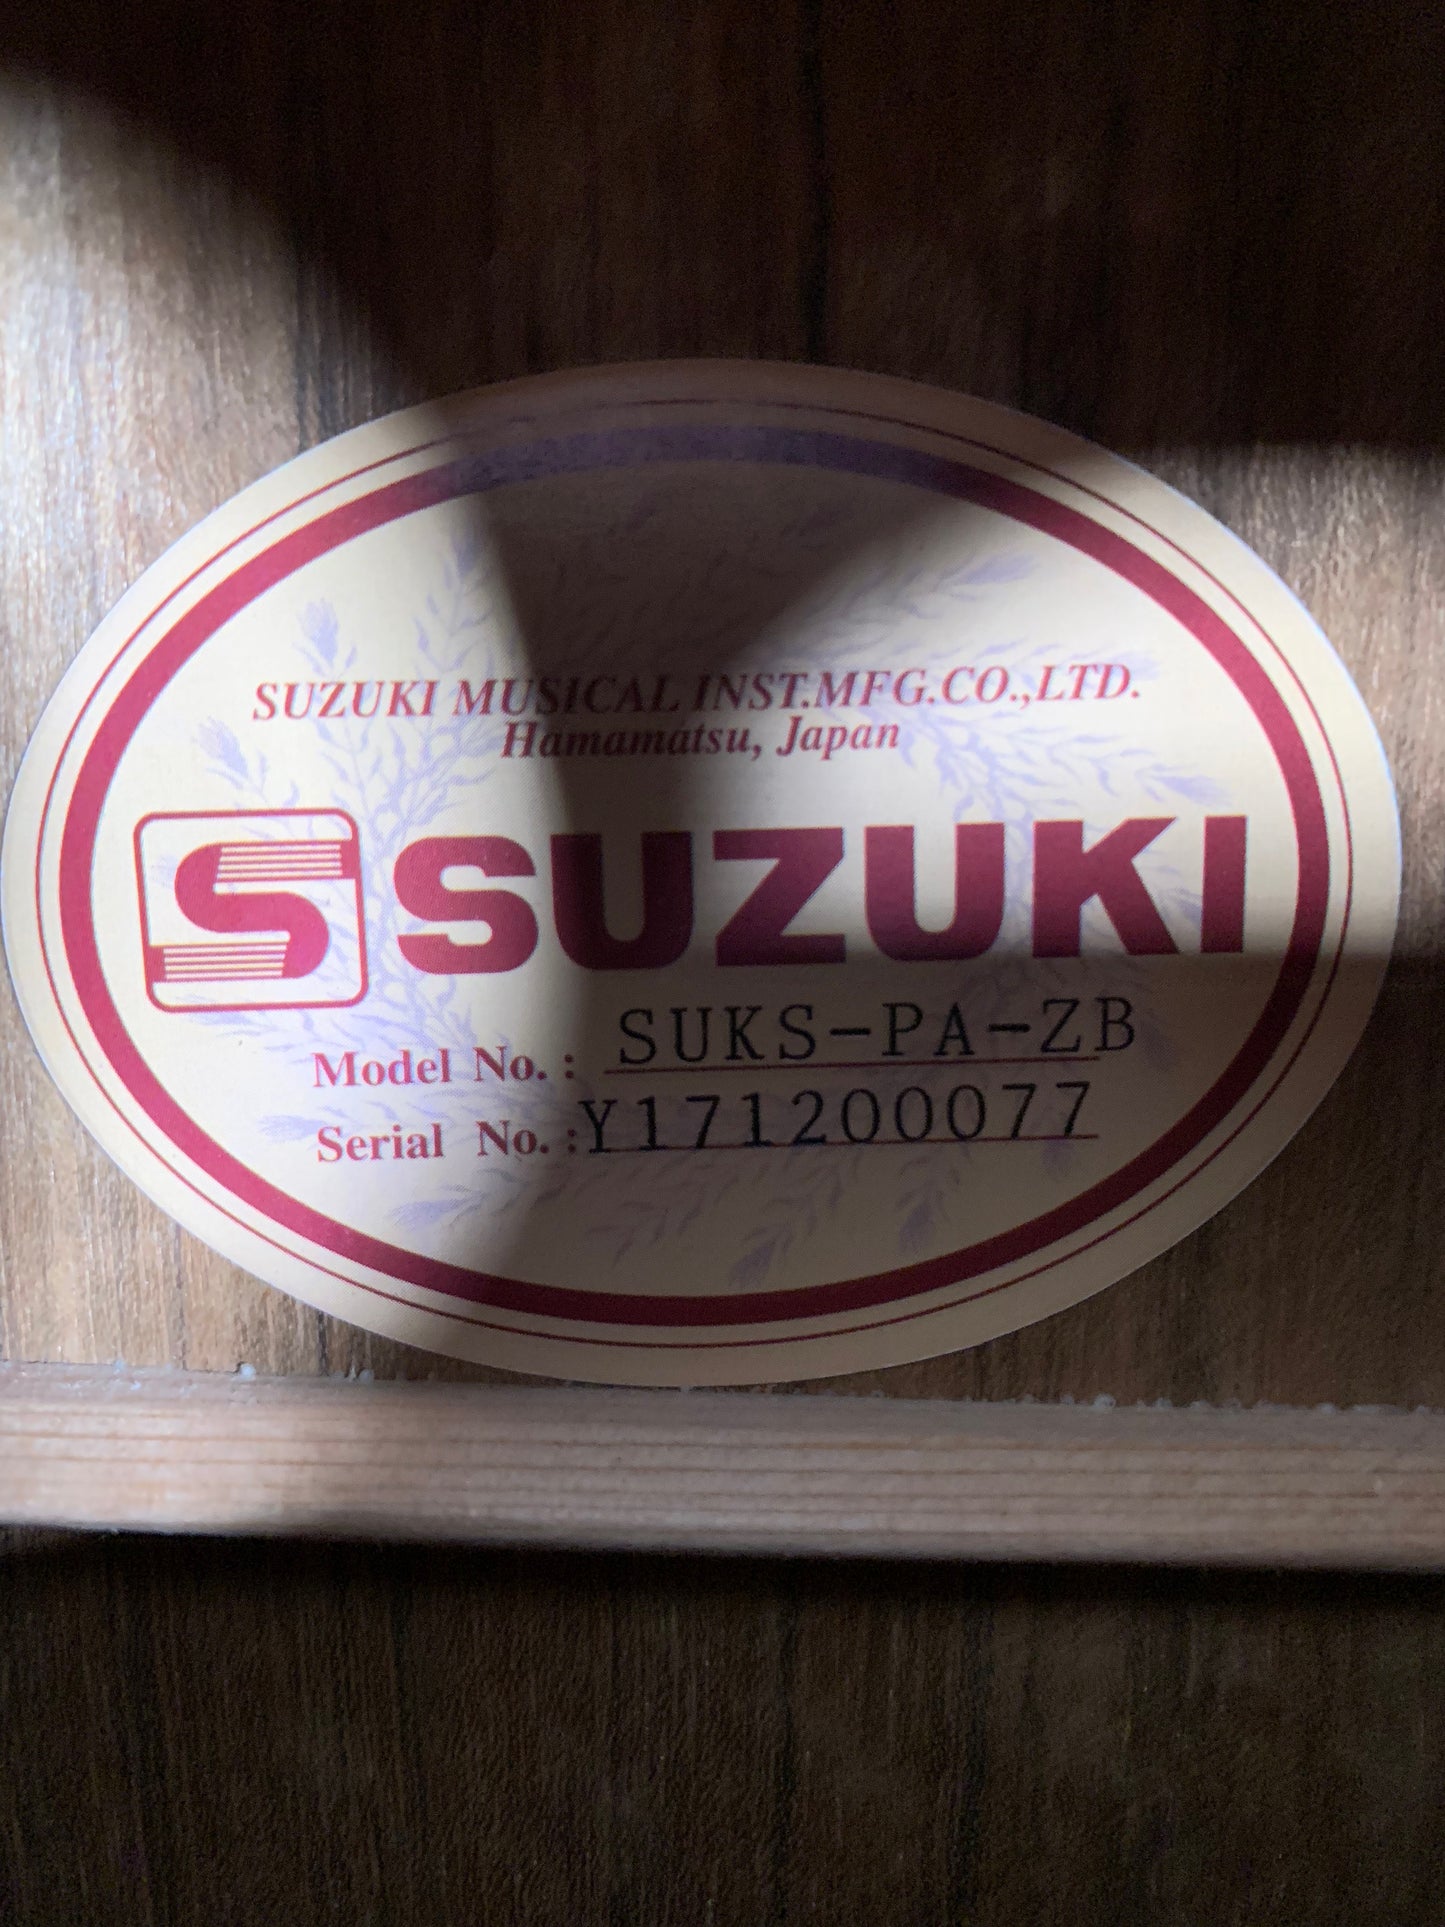 Suzuki SUKS-PA-ZB 21" Soprano Pineapple Ukulele Zebrawood & Bag